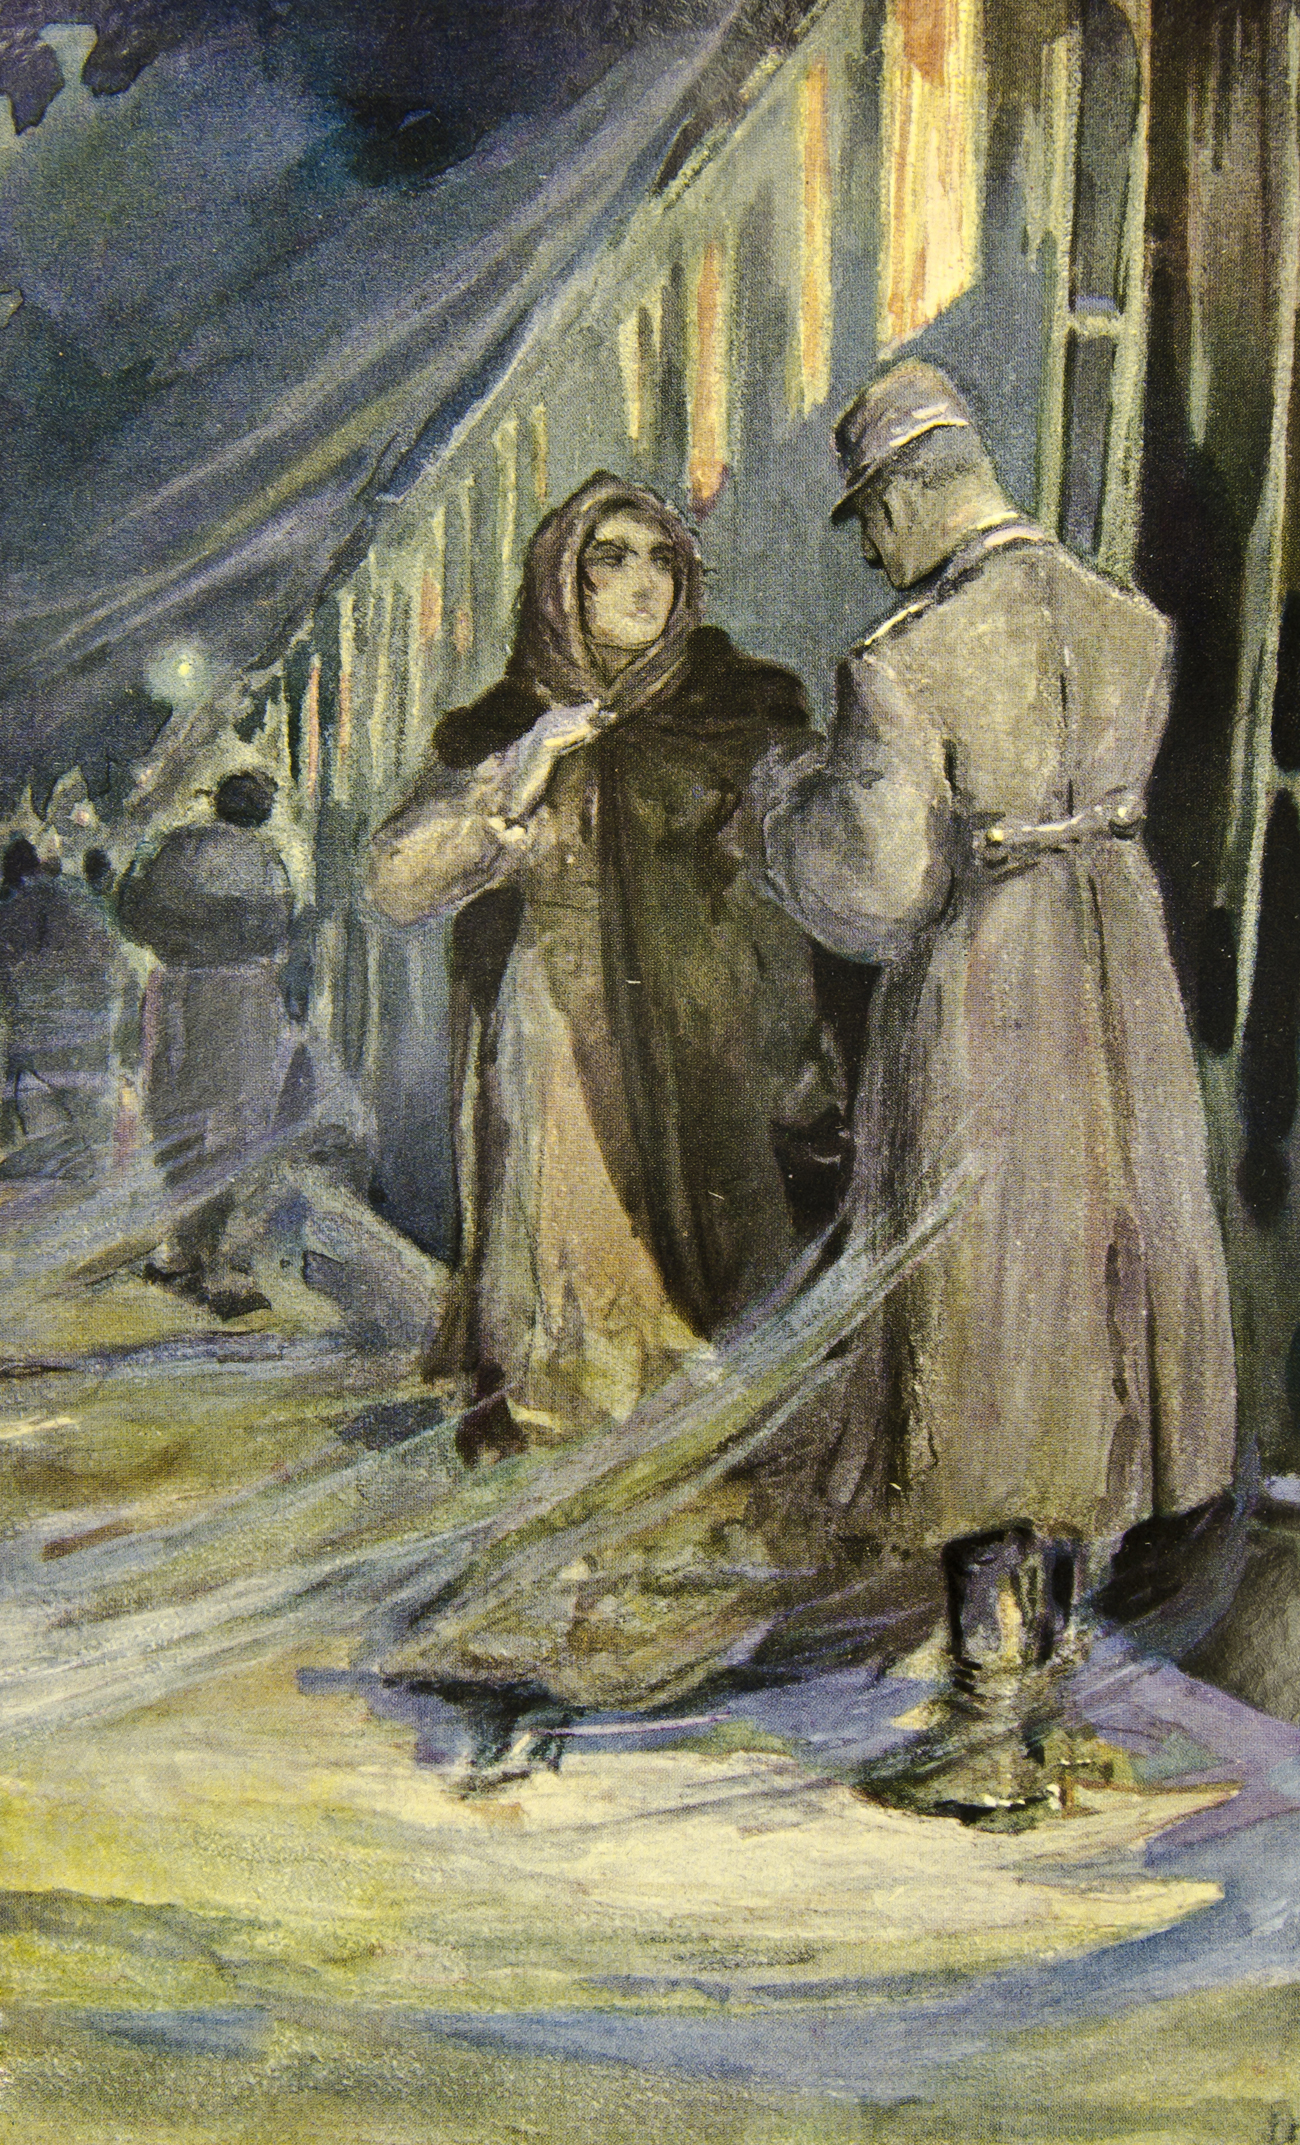 Leo Tolstoy 'Anna Karenina.' Illustration by artist Zahar Pichugin, publisher 'Partnership Sytin,' Moscow, Russia, 1914. / Source: Shutterstock/Legion Media